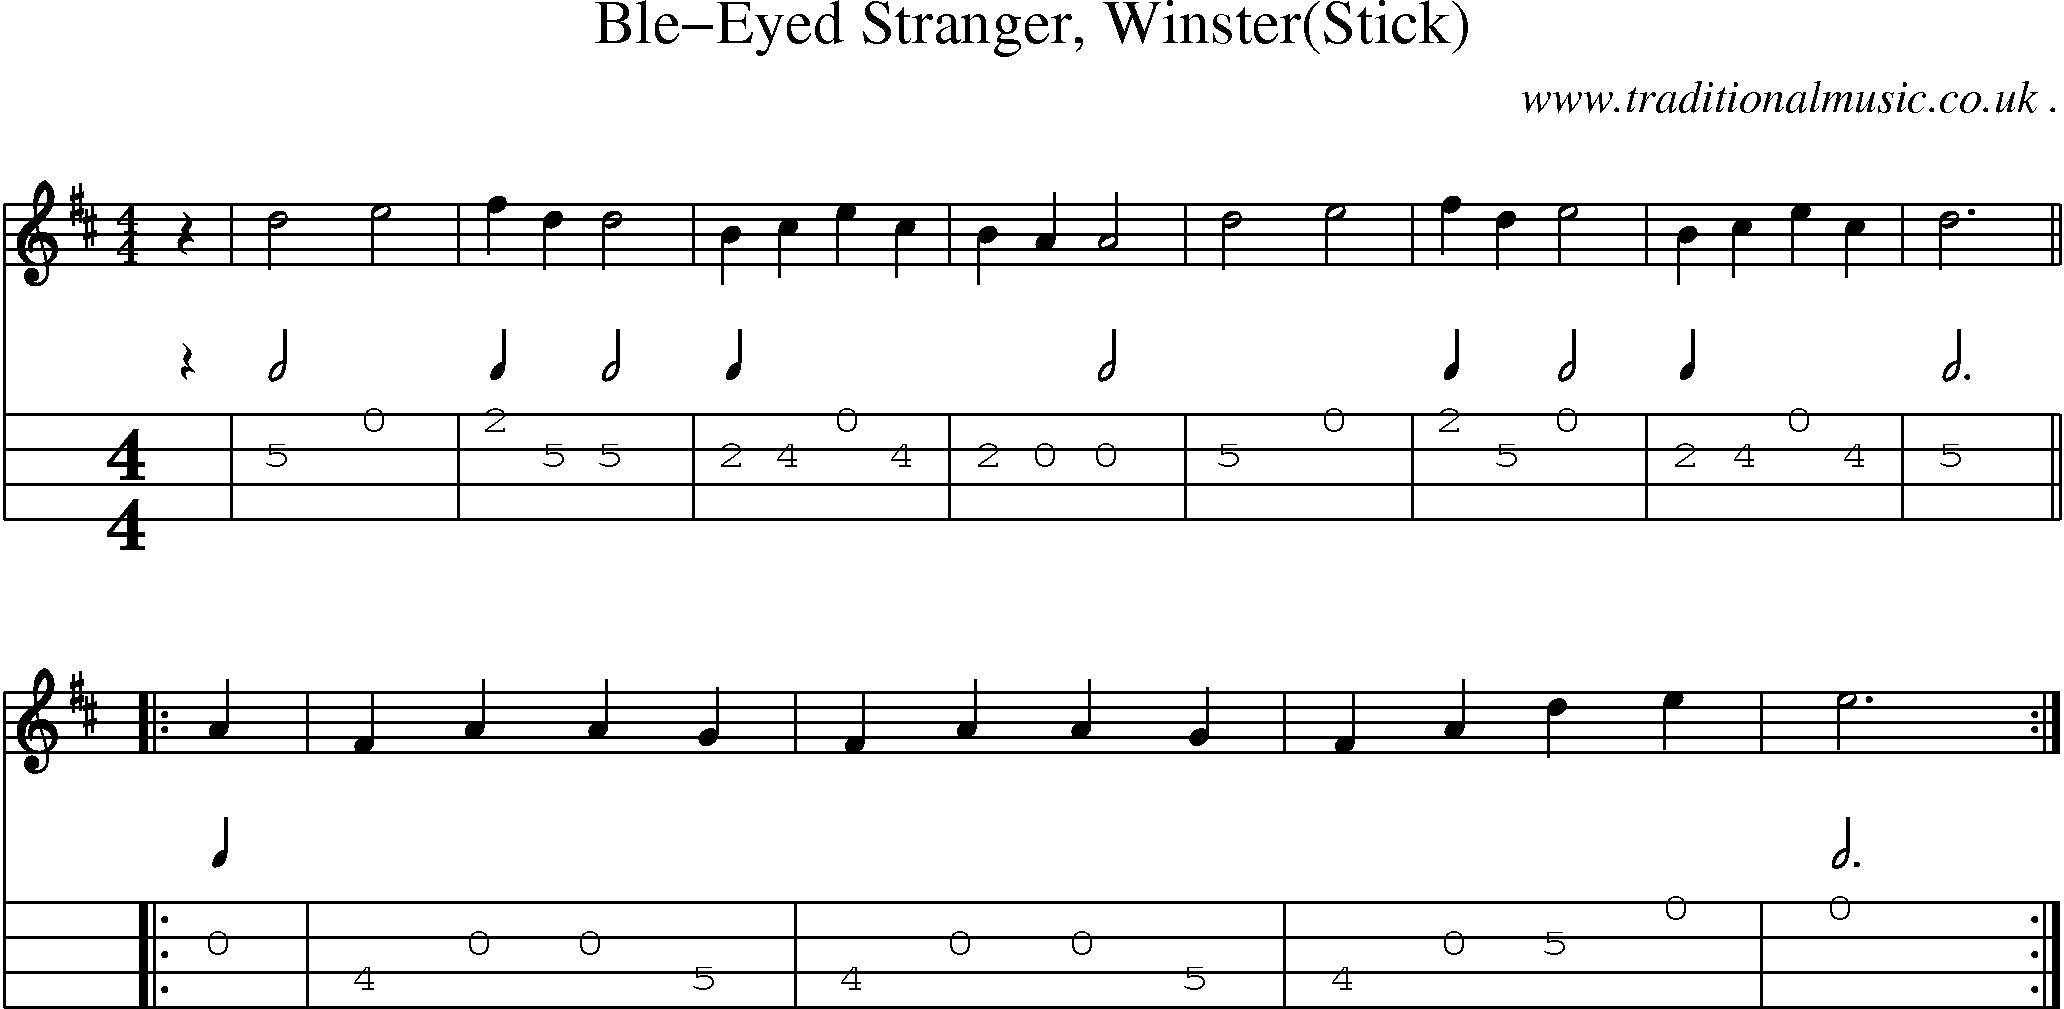 Sheet-Music and Mandolin Tabs for Ble-eyed Stranger Winster (stick)